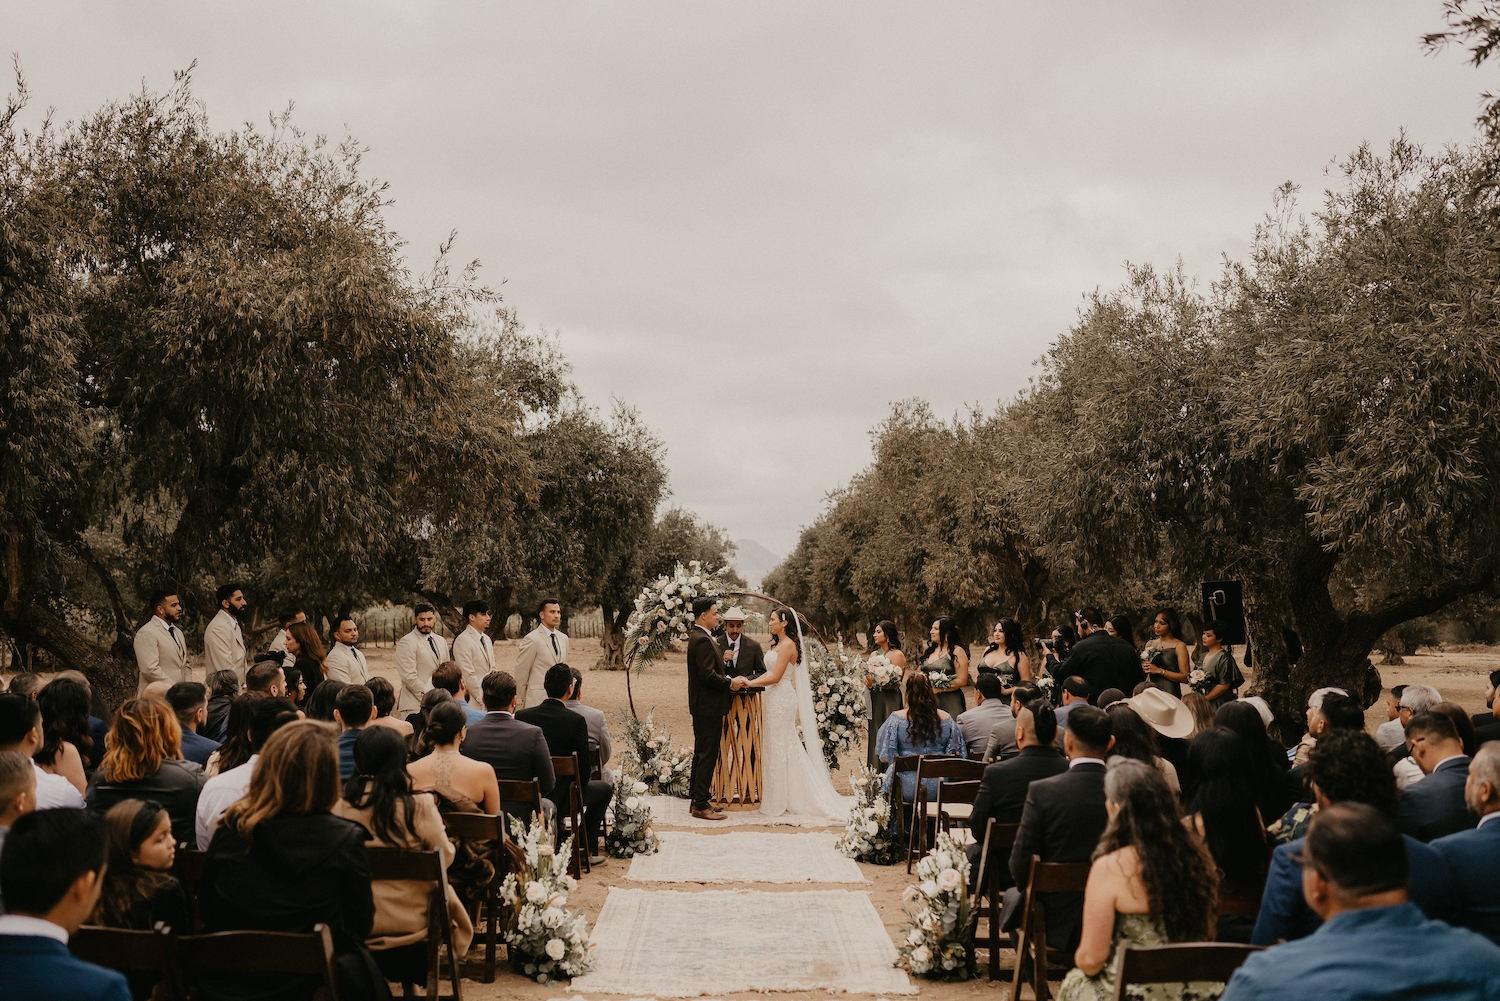 A MAGICAL WEDDING DAY AT ALMAZARA RANCHO OLIVARES: MIREYA & FIDEL'S CELEBRATION